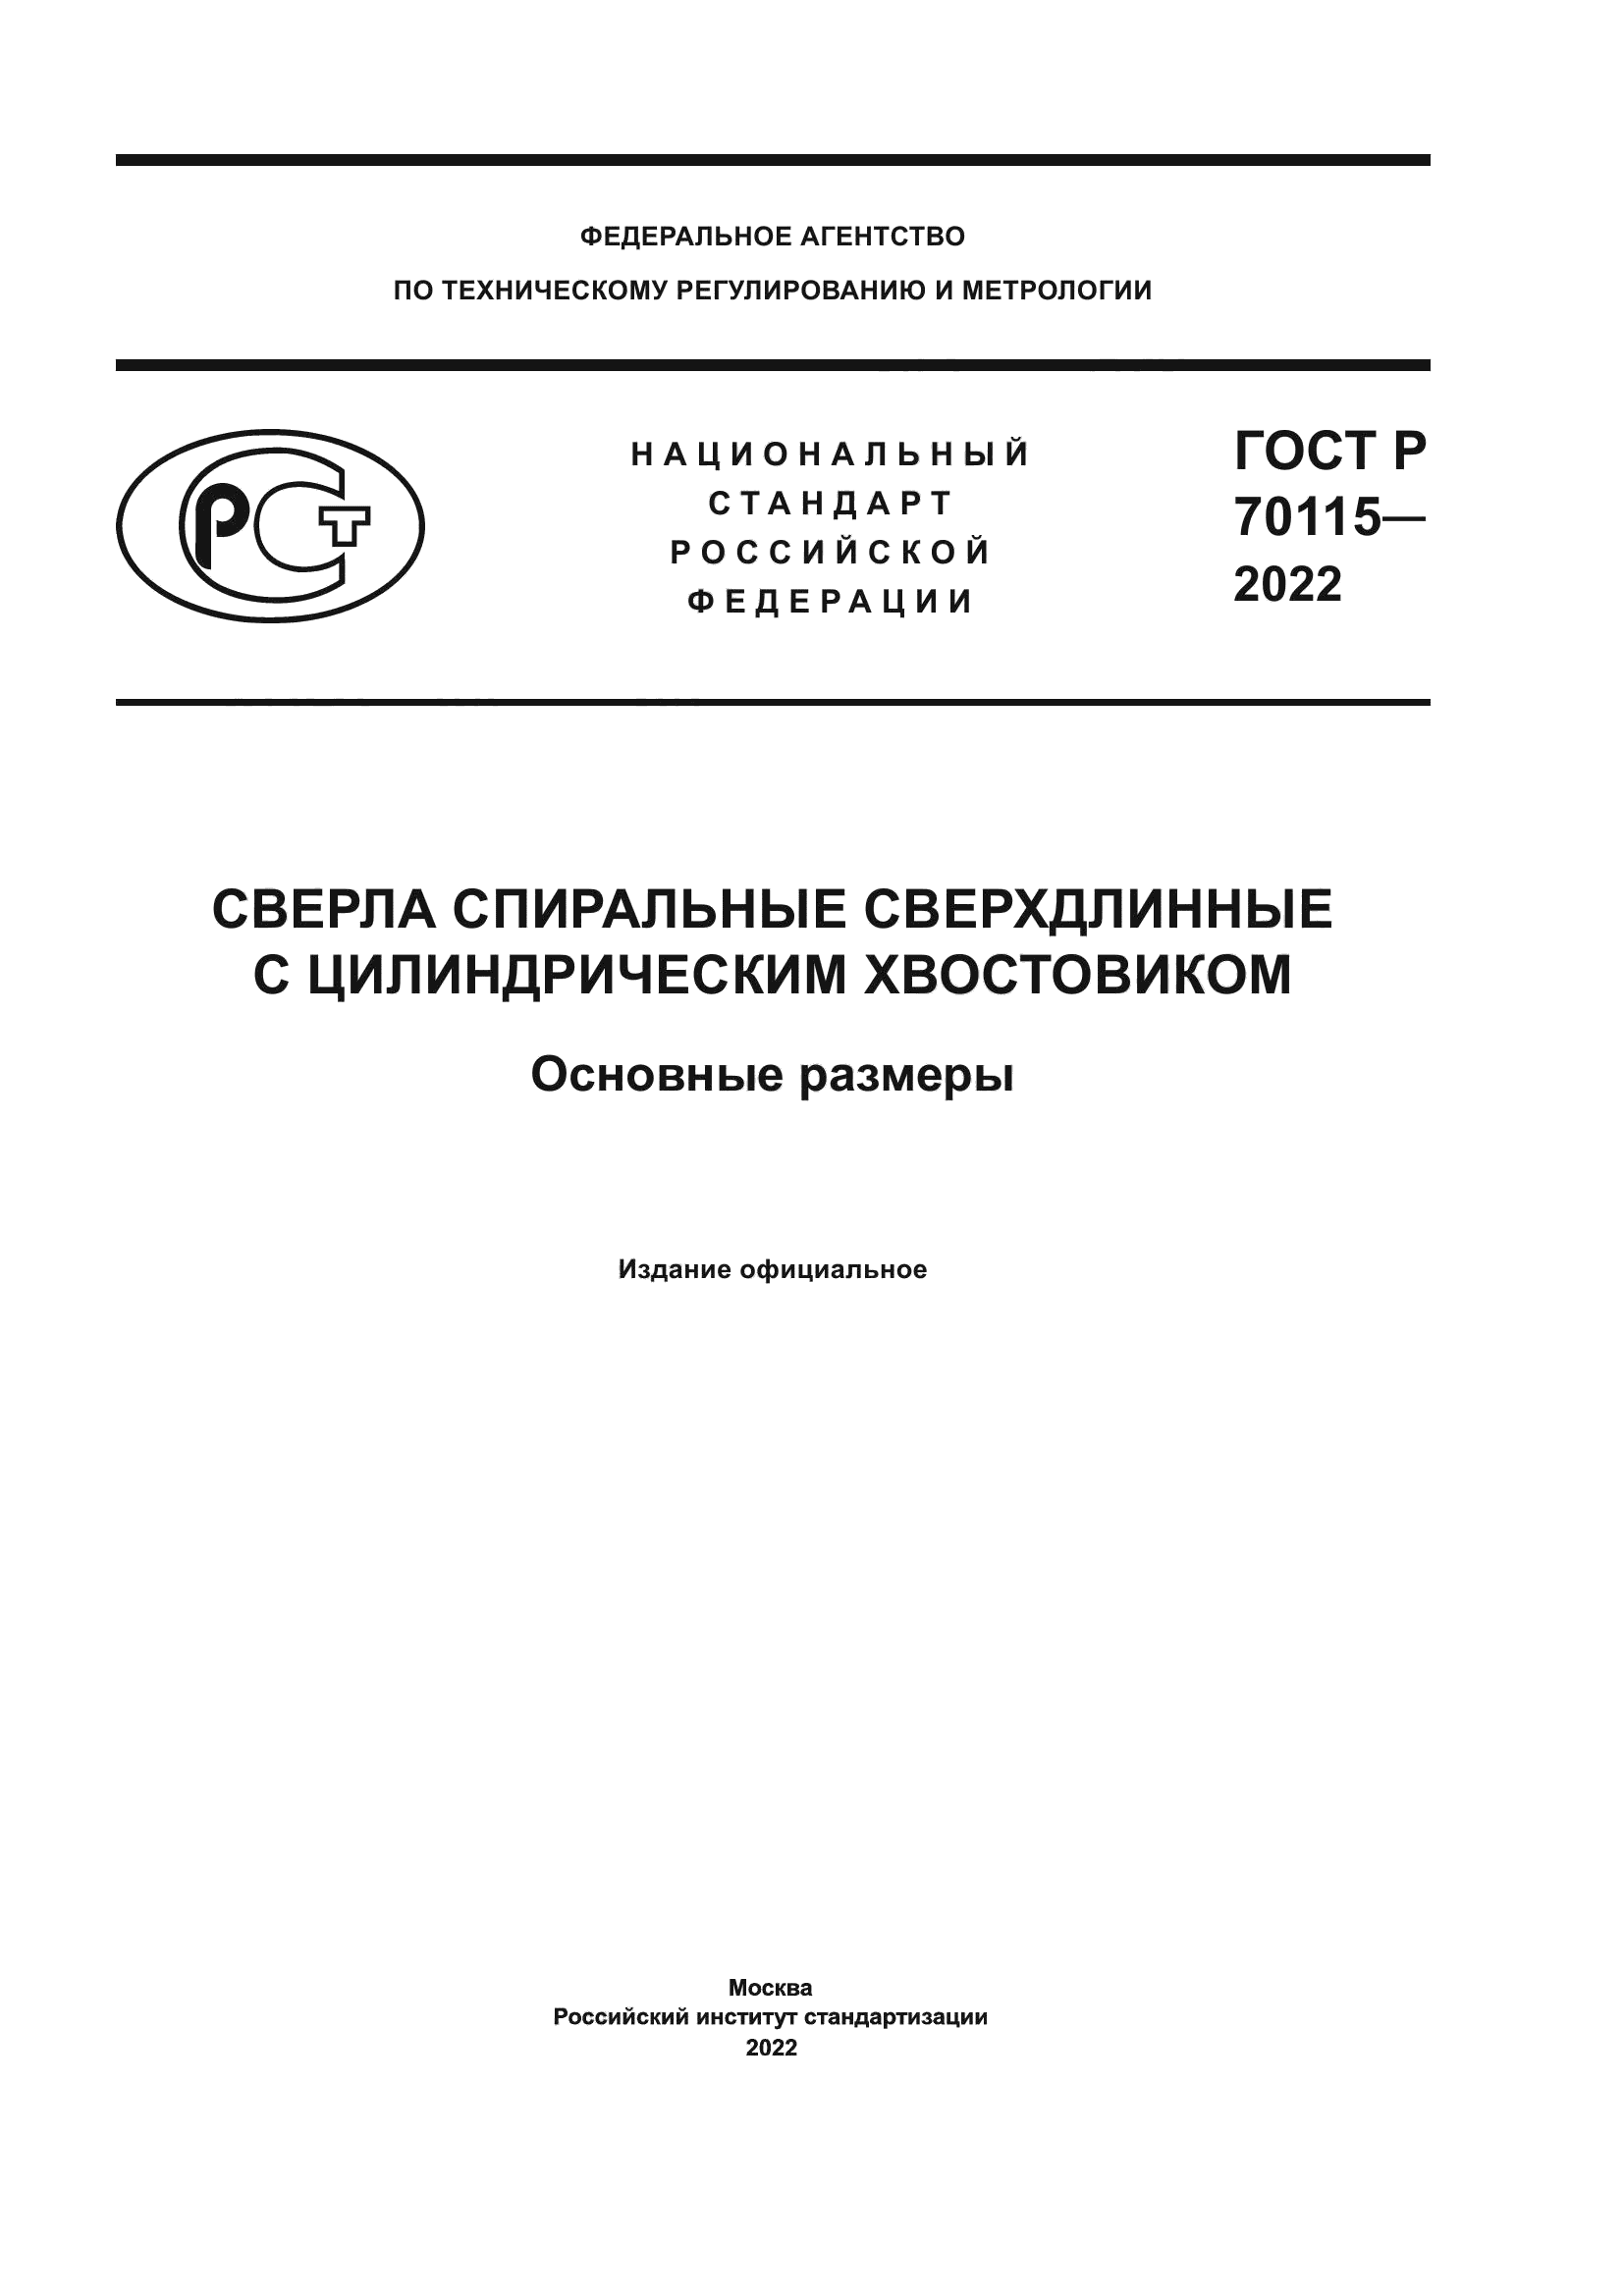 ГОСТ Р 70115-2022